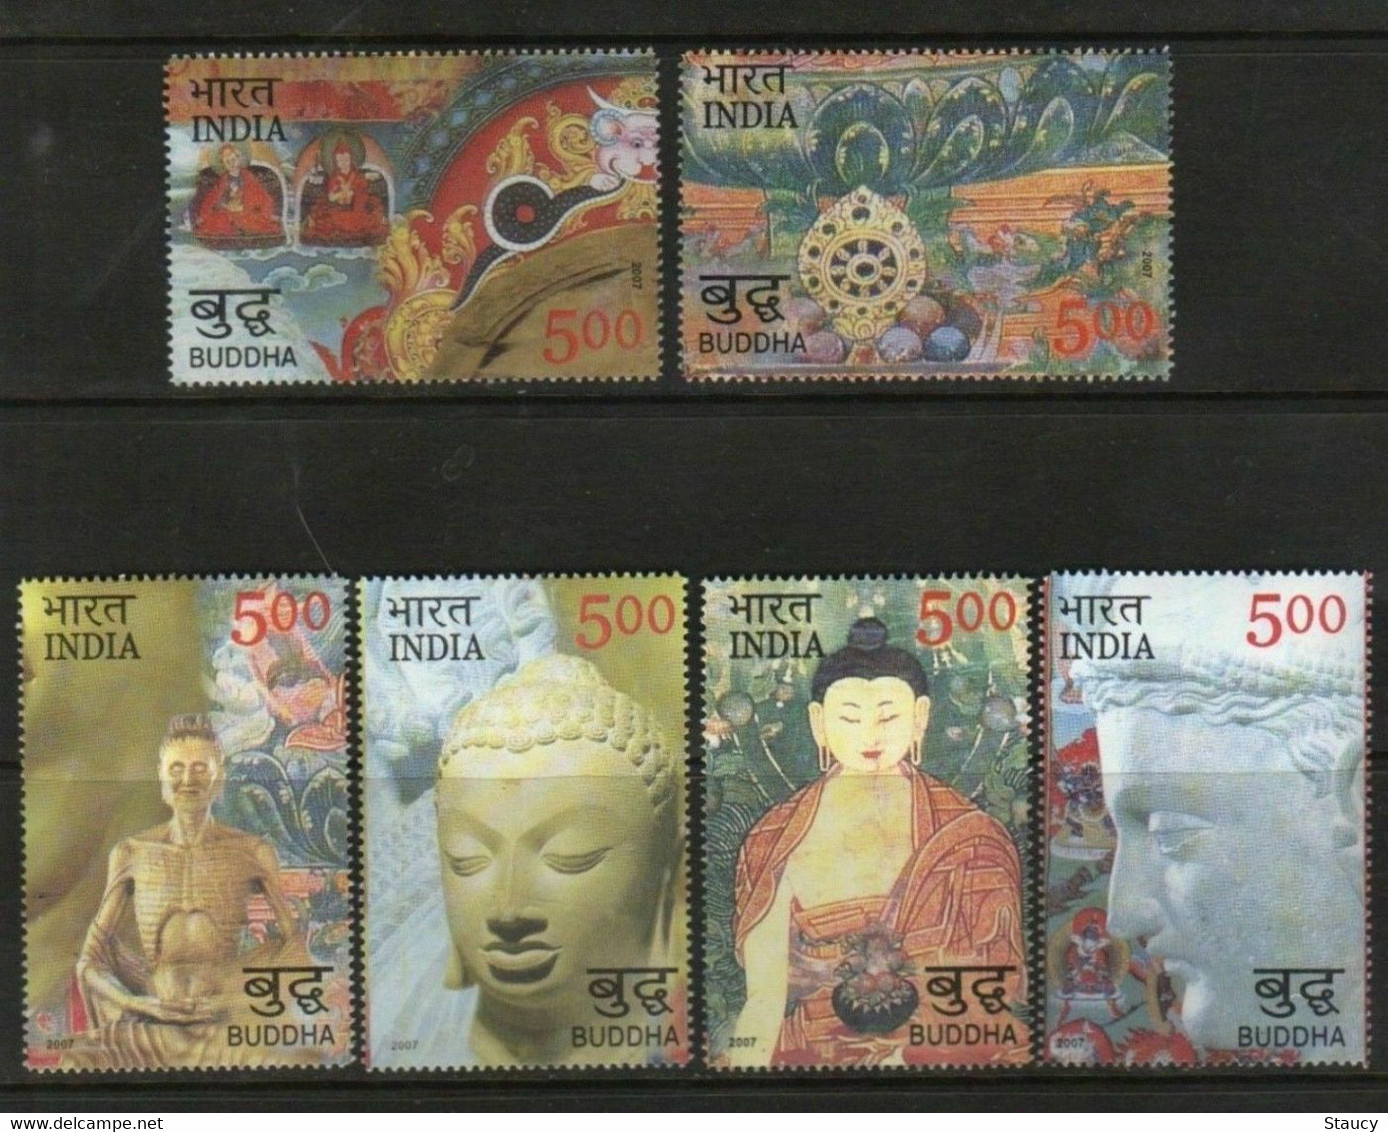 INDIA 2007 2550 YEARS OF MAHAPARINIRVANA OF THE BUDDHA 6v SET MNH, P.O Fresh & Fine - Engravings